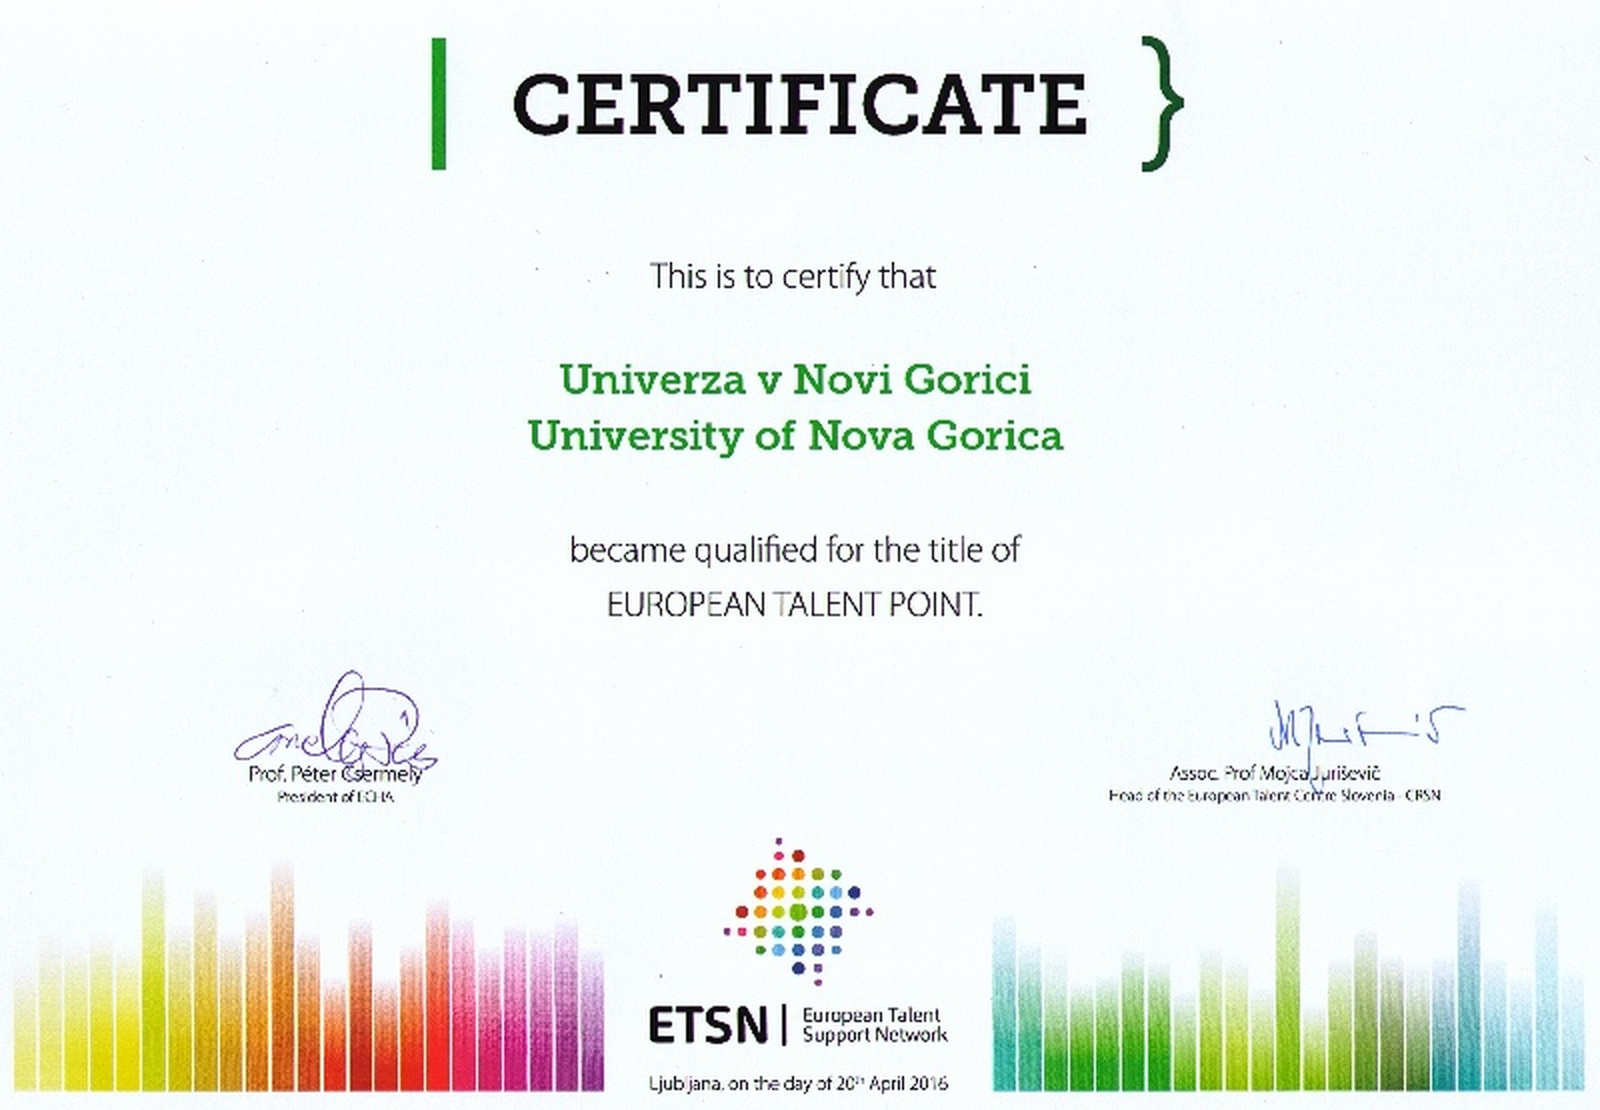 University of Nova Gorica becomes European Talent Point